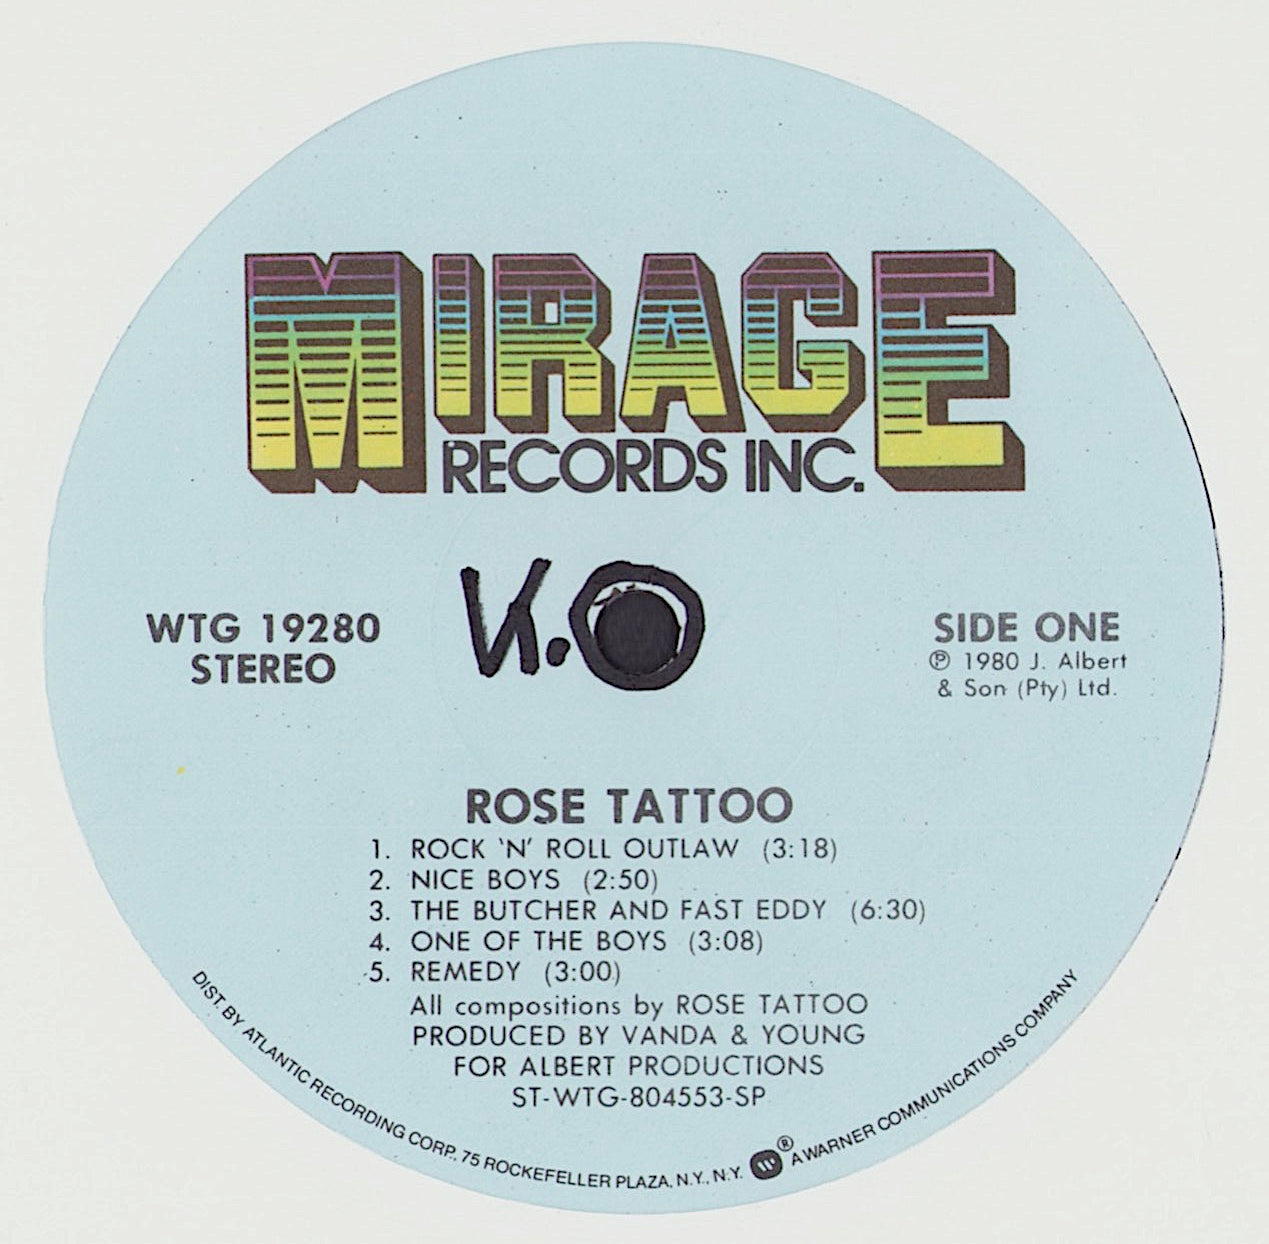 Amazon.com: Rose Tattoo: CDs & Vinyl